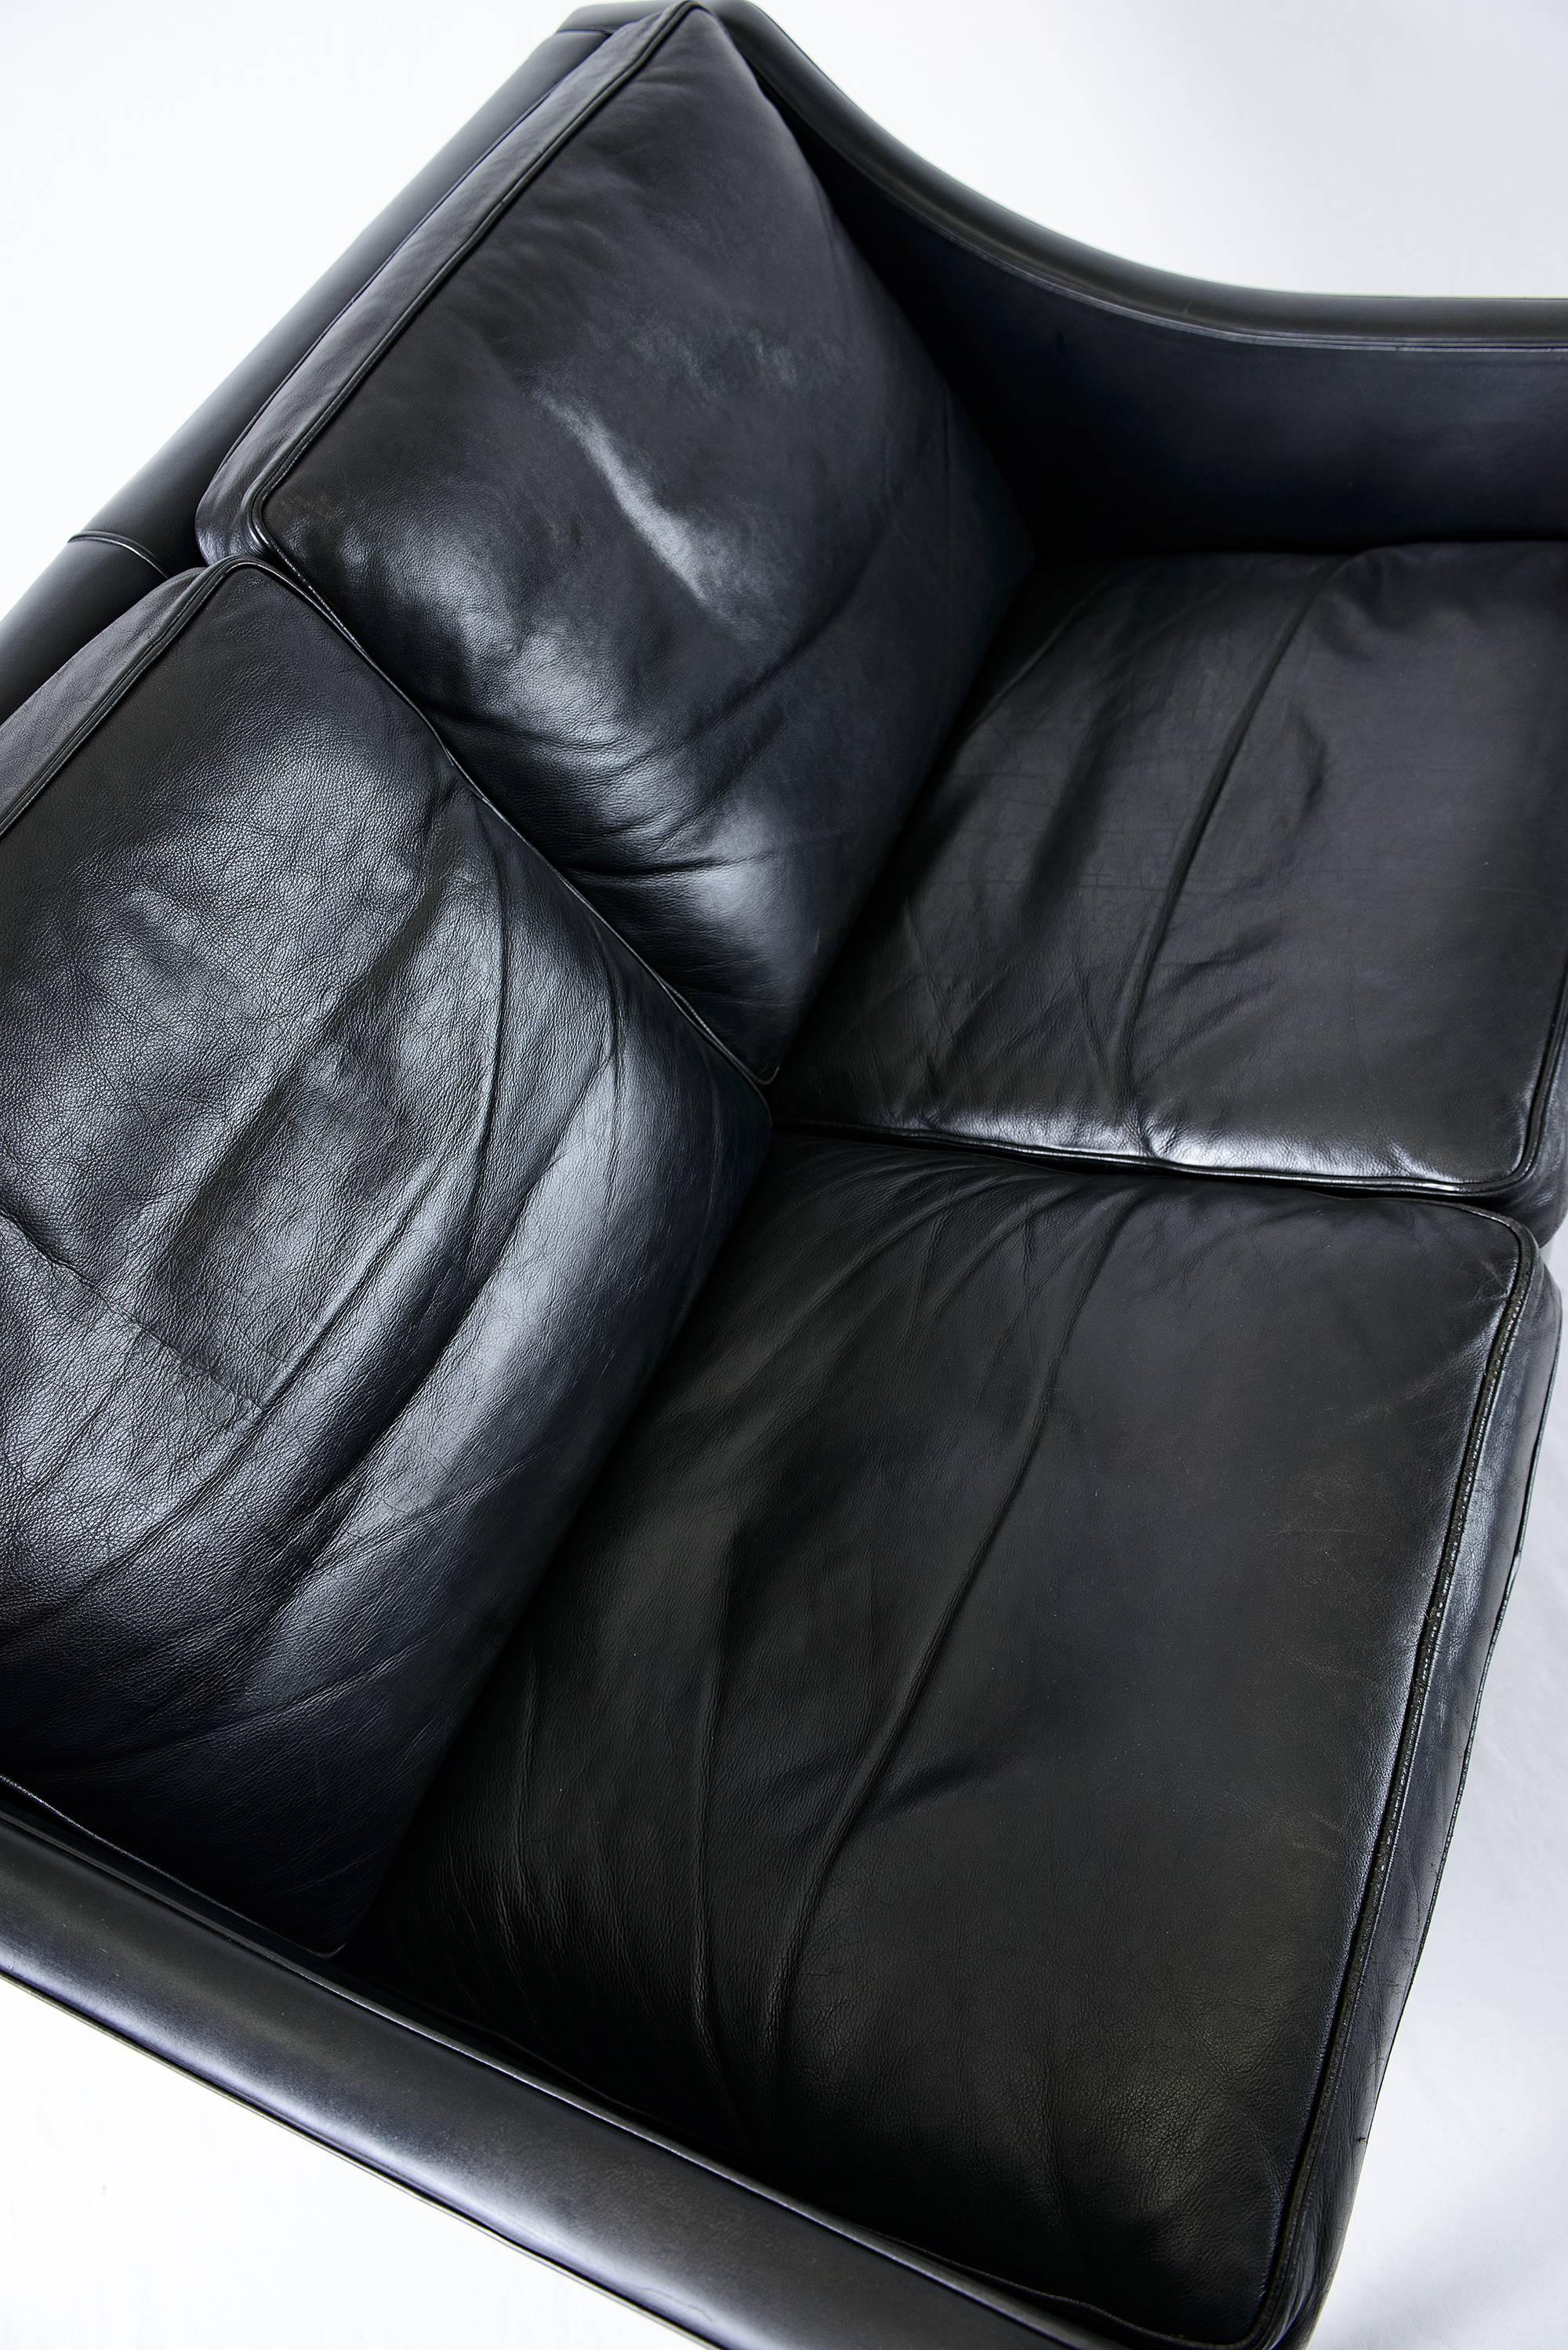 Børge Mogensen Model #2208 Two-Seat Sofa For Sale 3